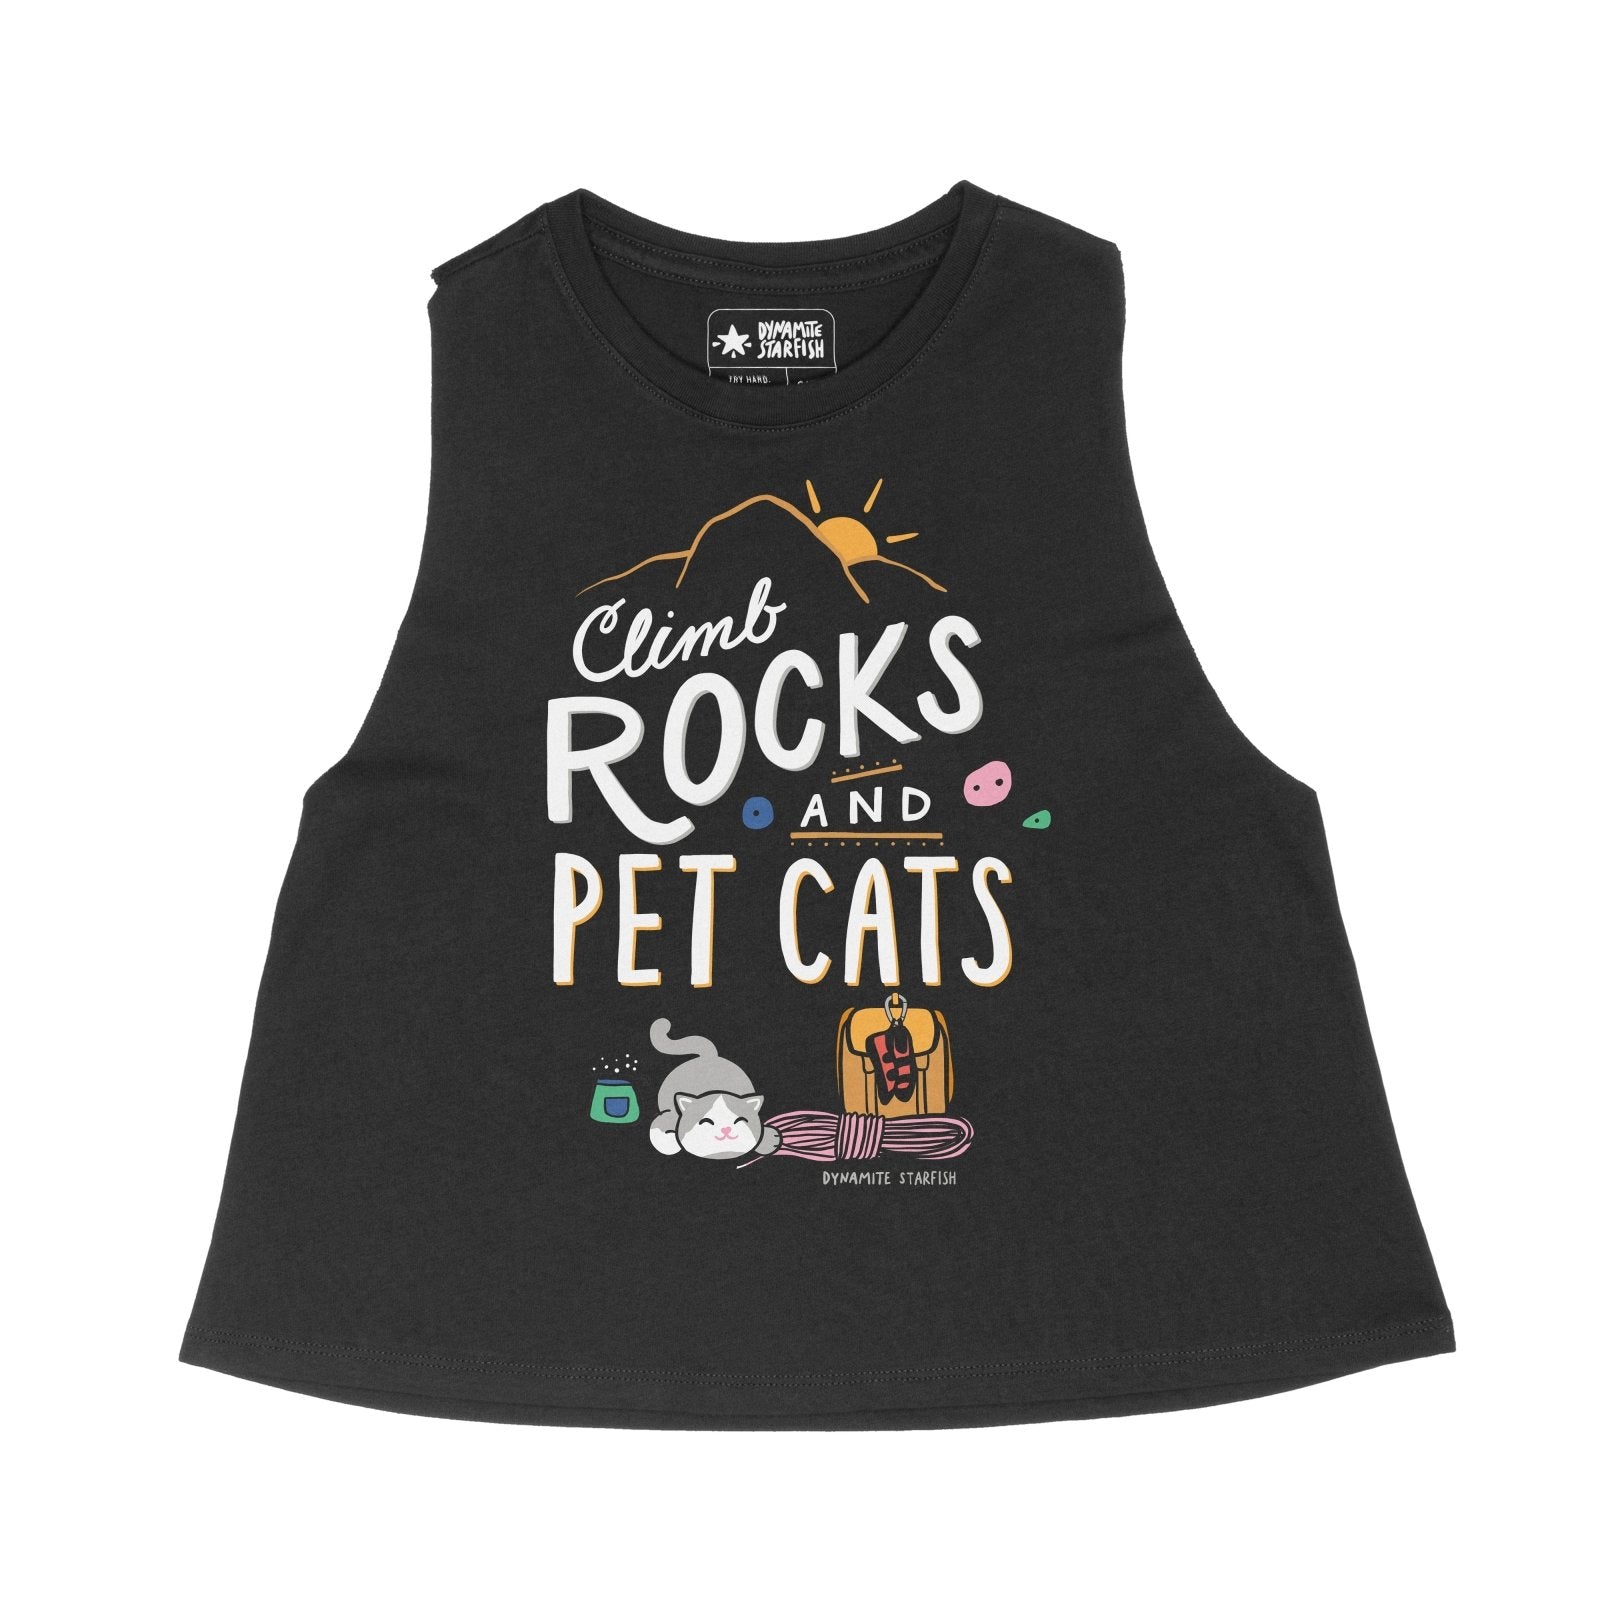 rock climbing t-shirts gifts - -Climb Rocks and Pet Cats — Racerback Crop Tank - Dynamite Starfish - gift for climber